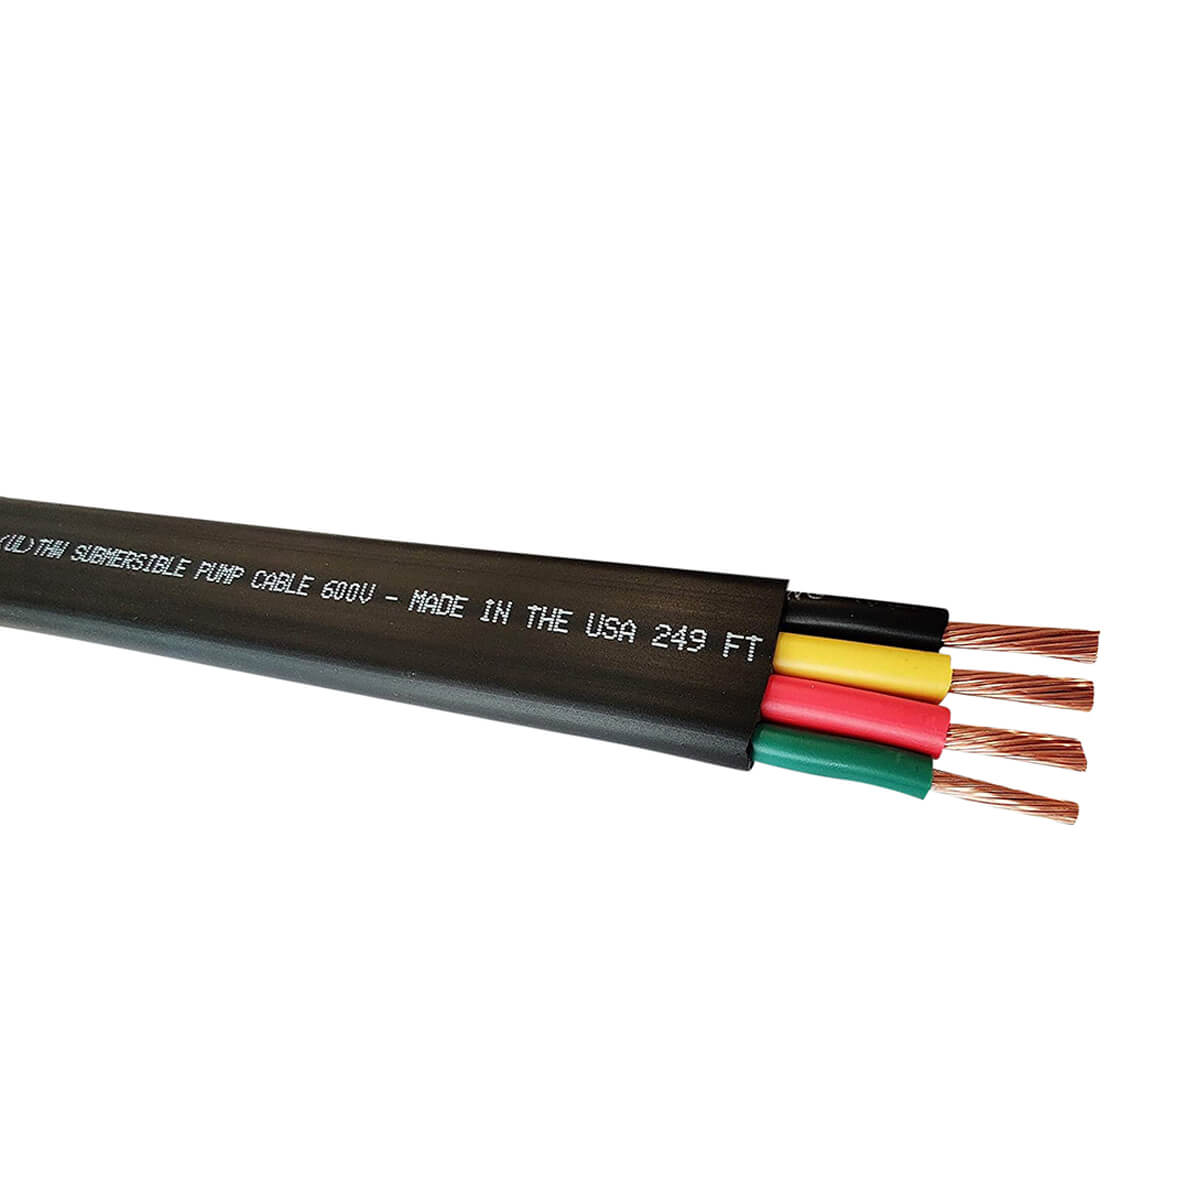 Sub Pump Cable - 14/3 - 50 m